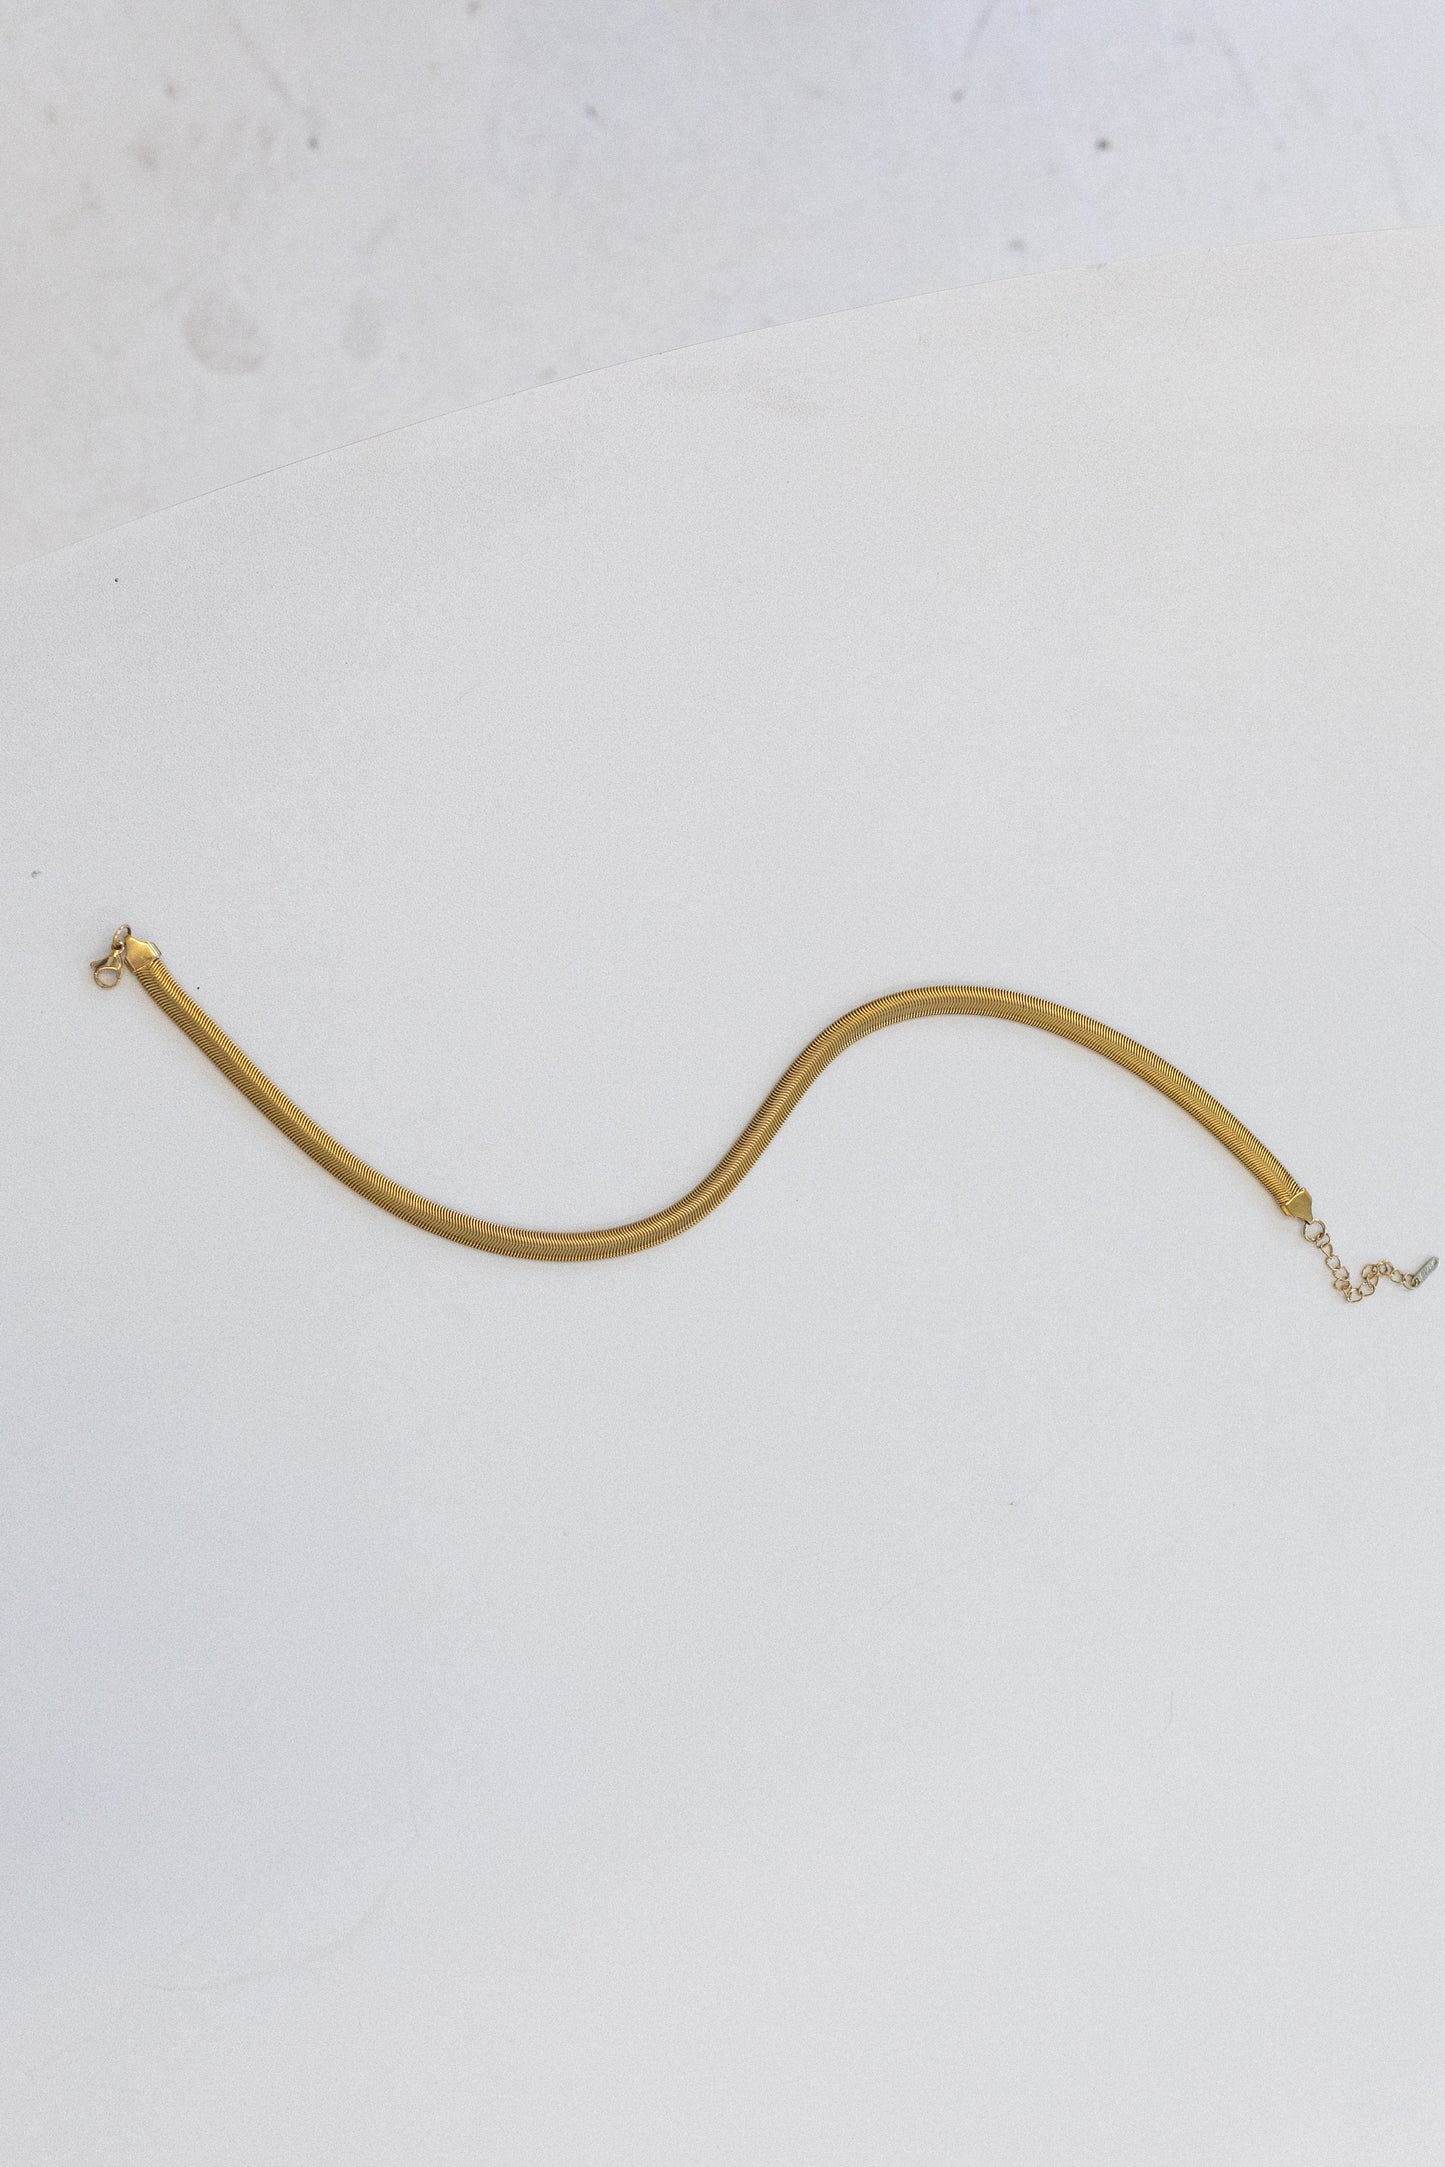 XL Snake Chain